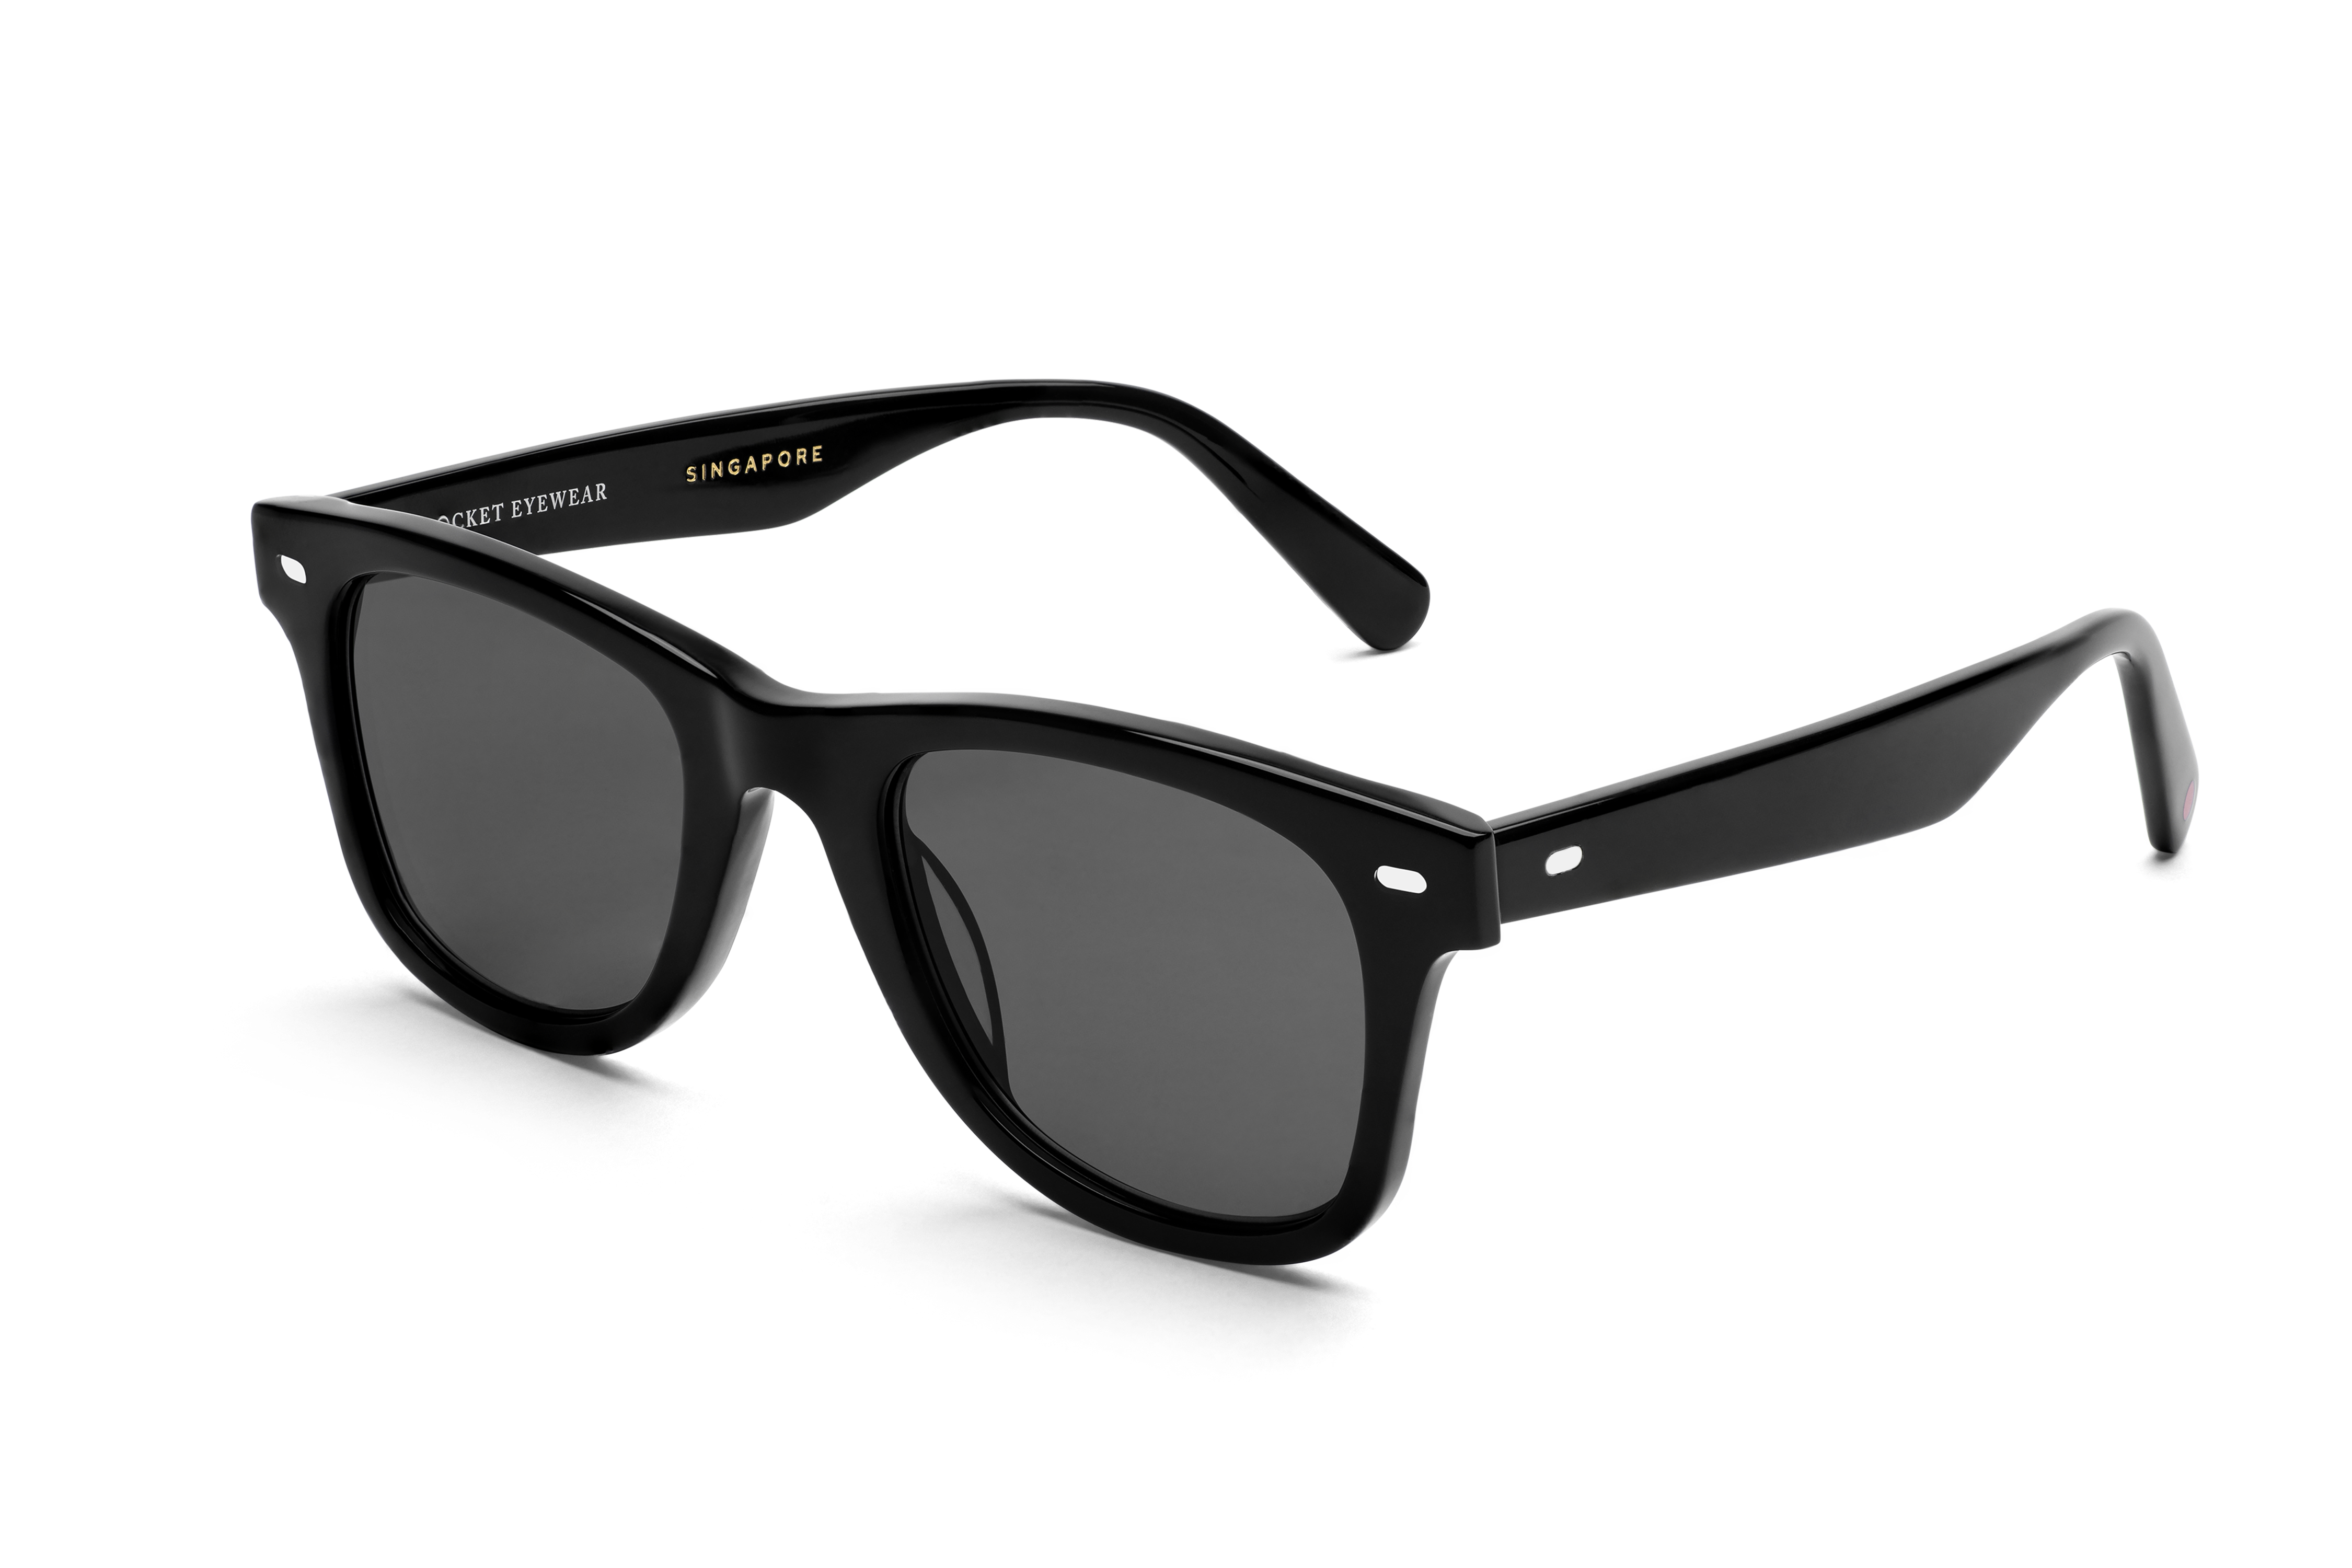 Rocket Eyewear SPT Classic Jet Black with Grey Polarized Lenses (Limited Edition)